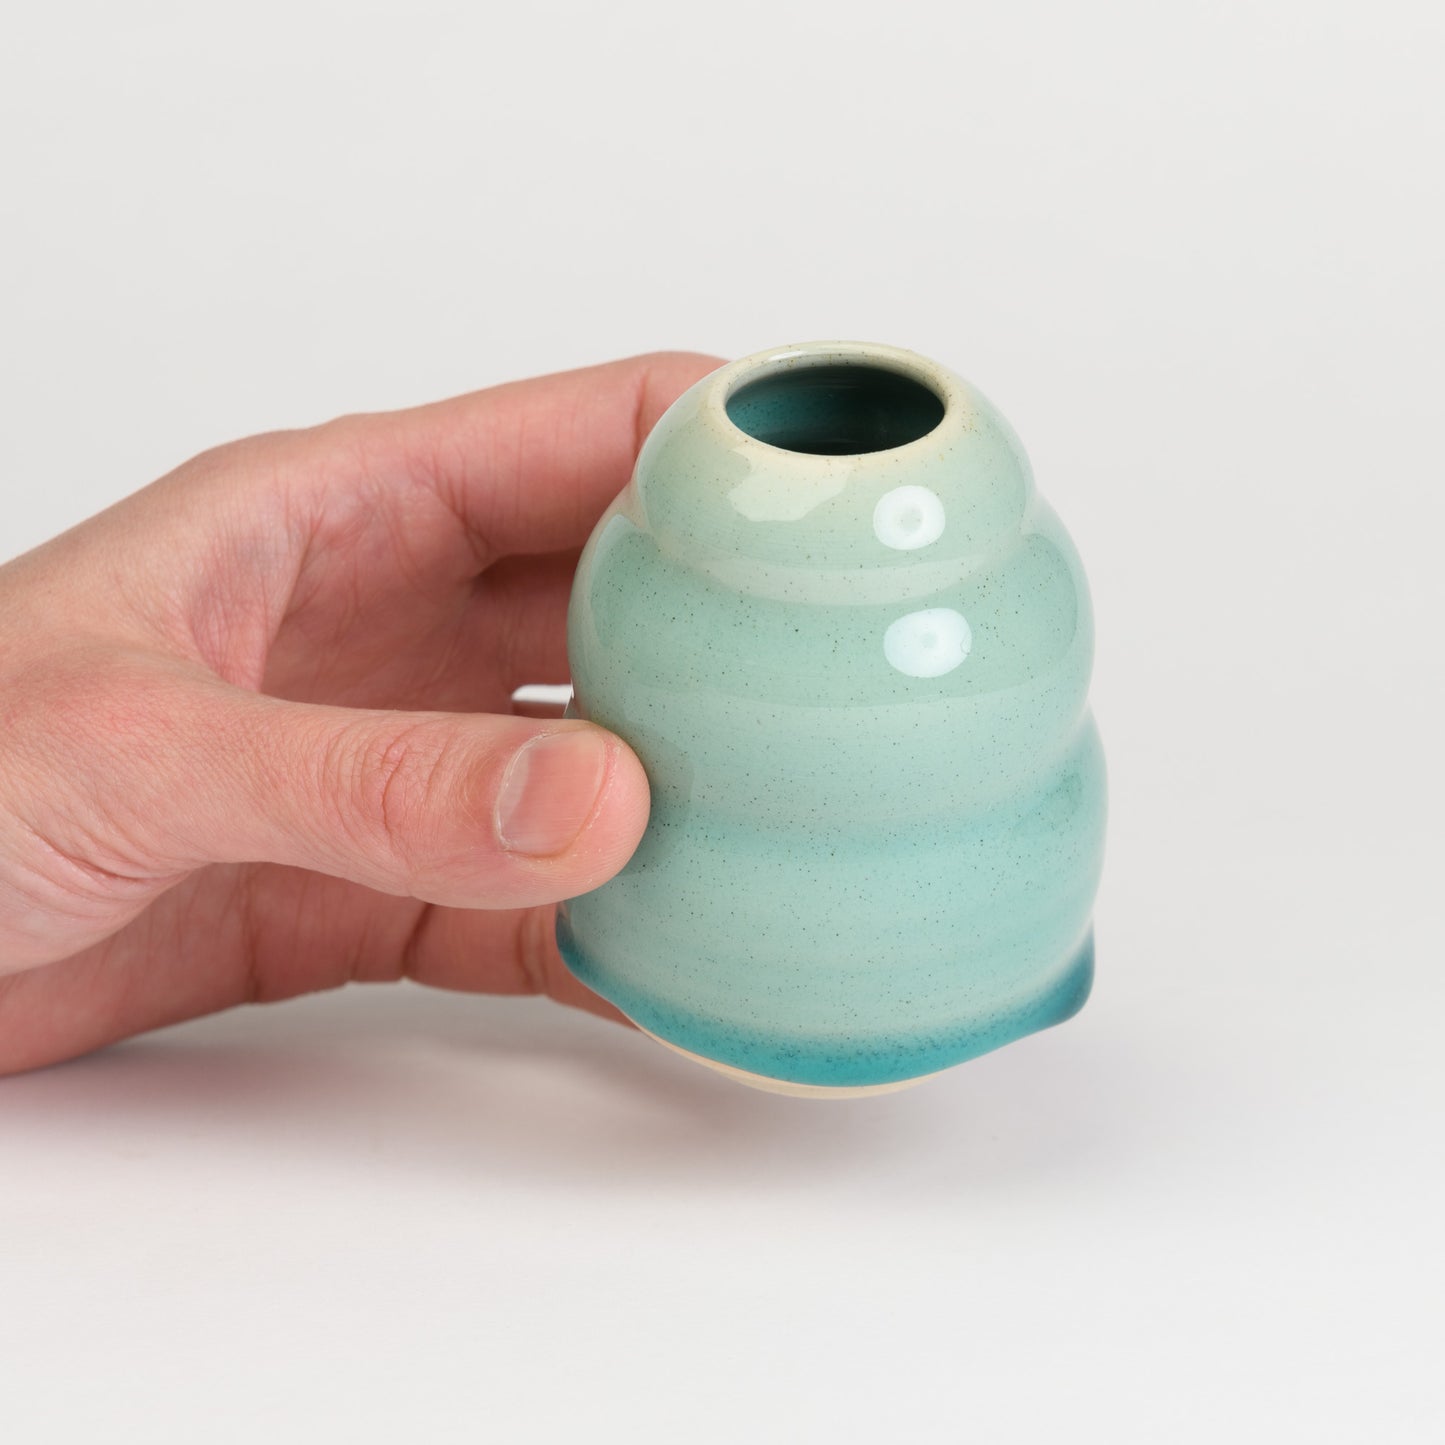 Mini Vase - Jelly Turquoise Bellied